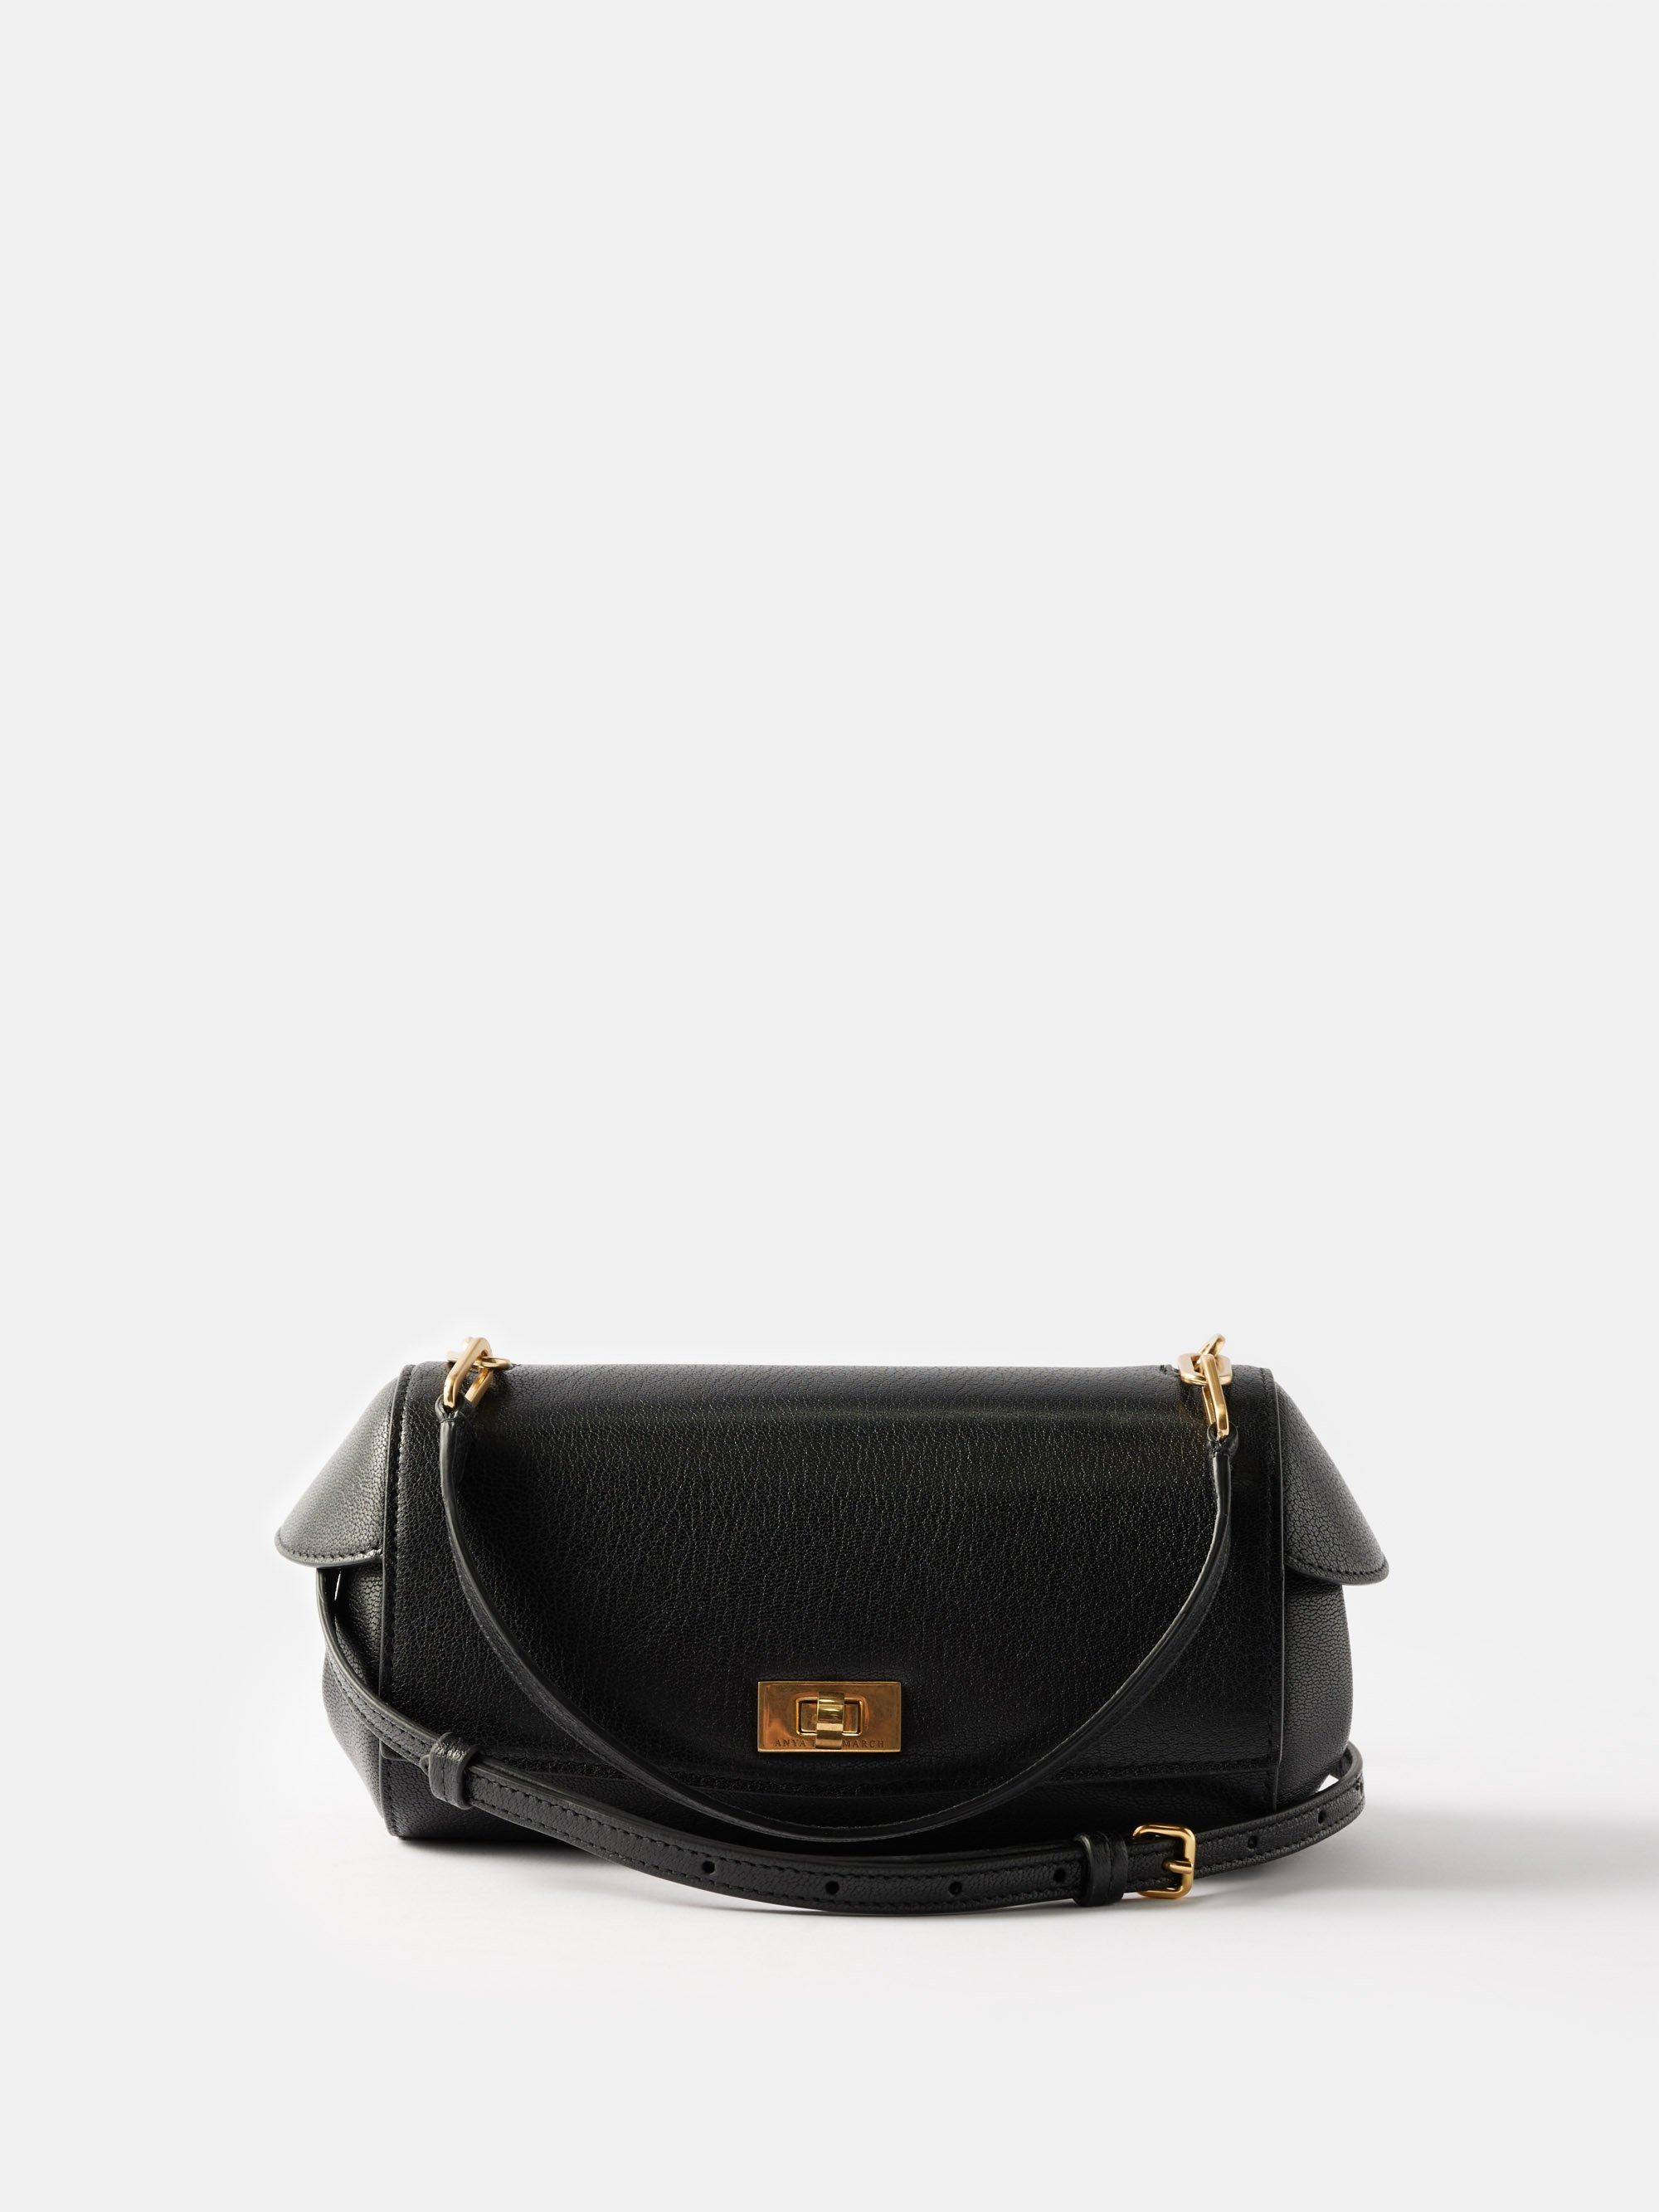 Anya Hindmarch Tube Leather Shoulder Bag in Black | Lyst